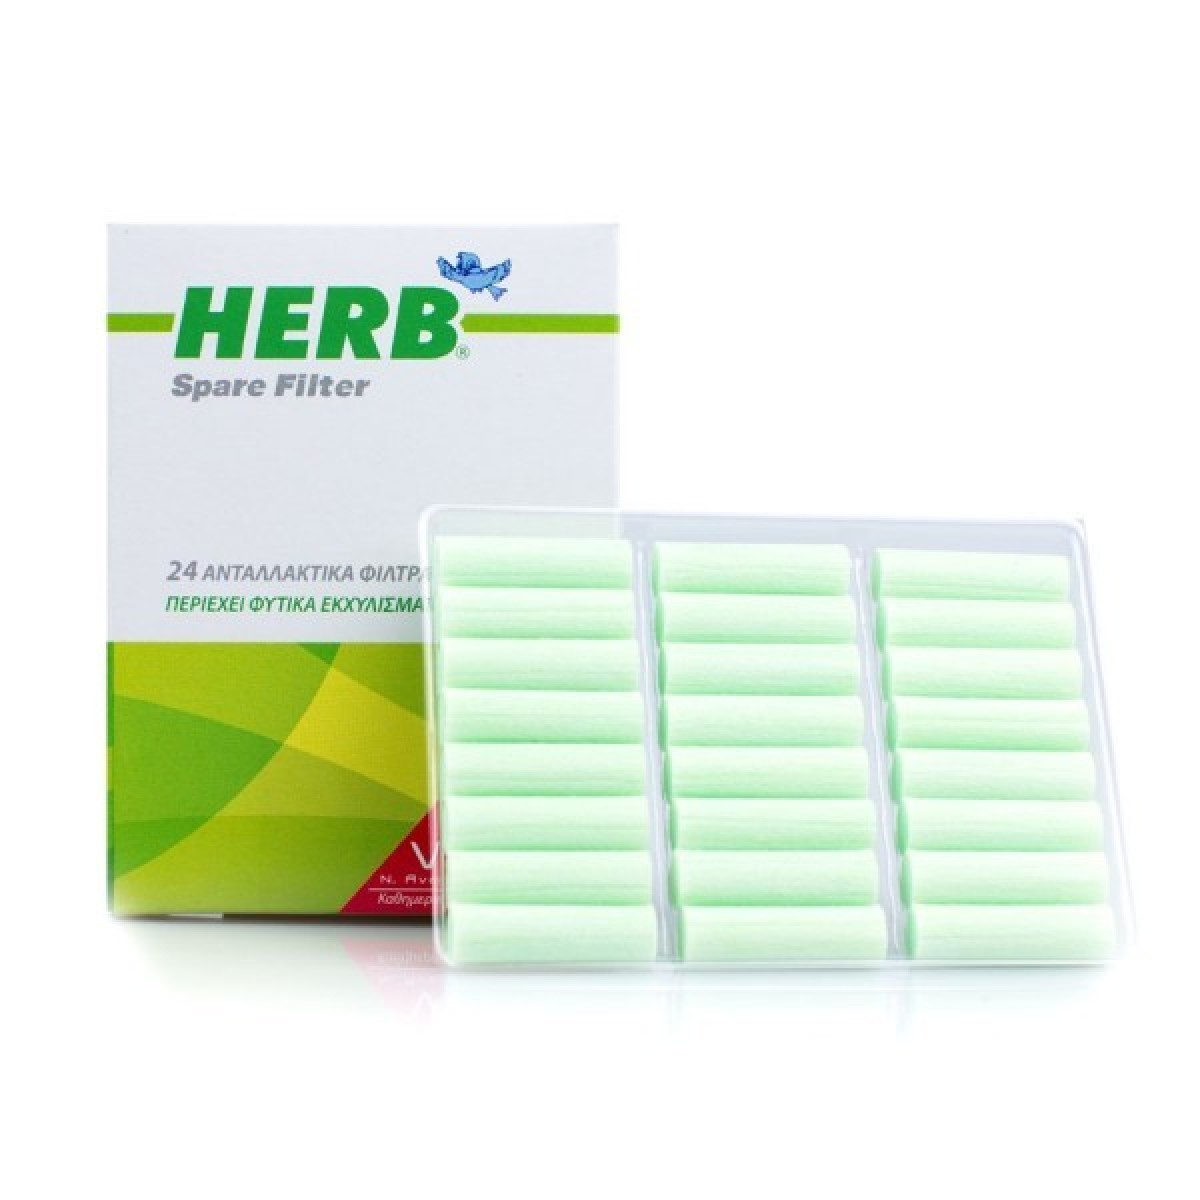 Herb | Spare Filter | Φίλτρα Πίπας | 24 Ανταλλακτικά